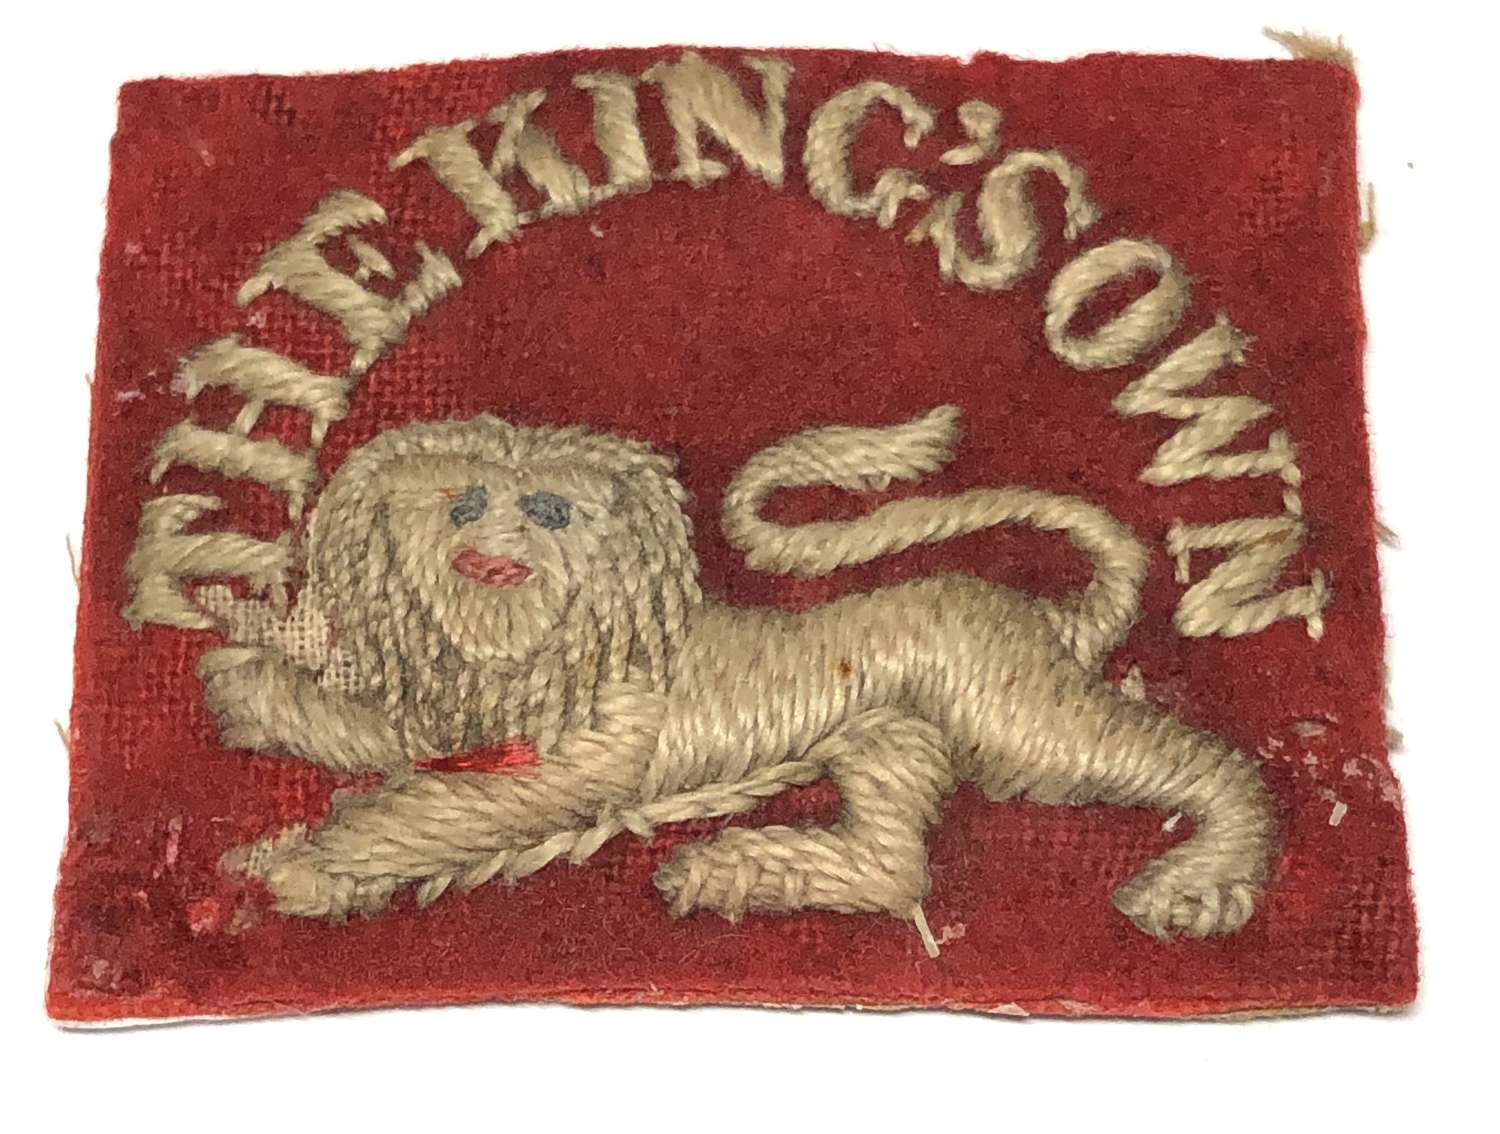 King's Own Royal Regiment cloth pagri badge